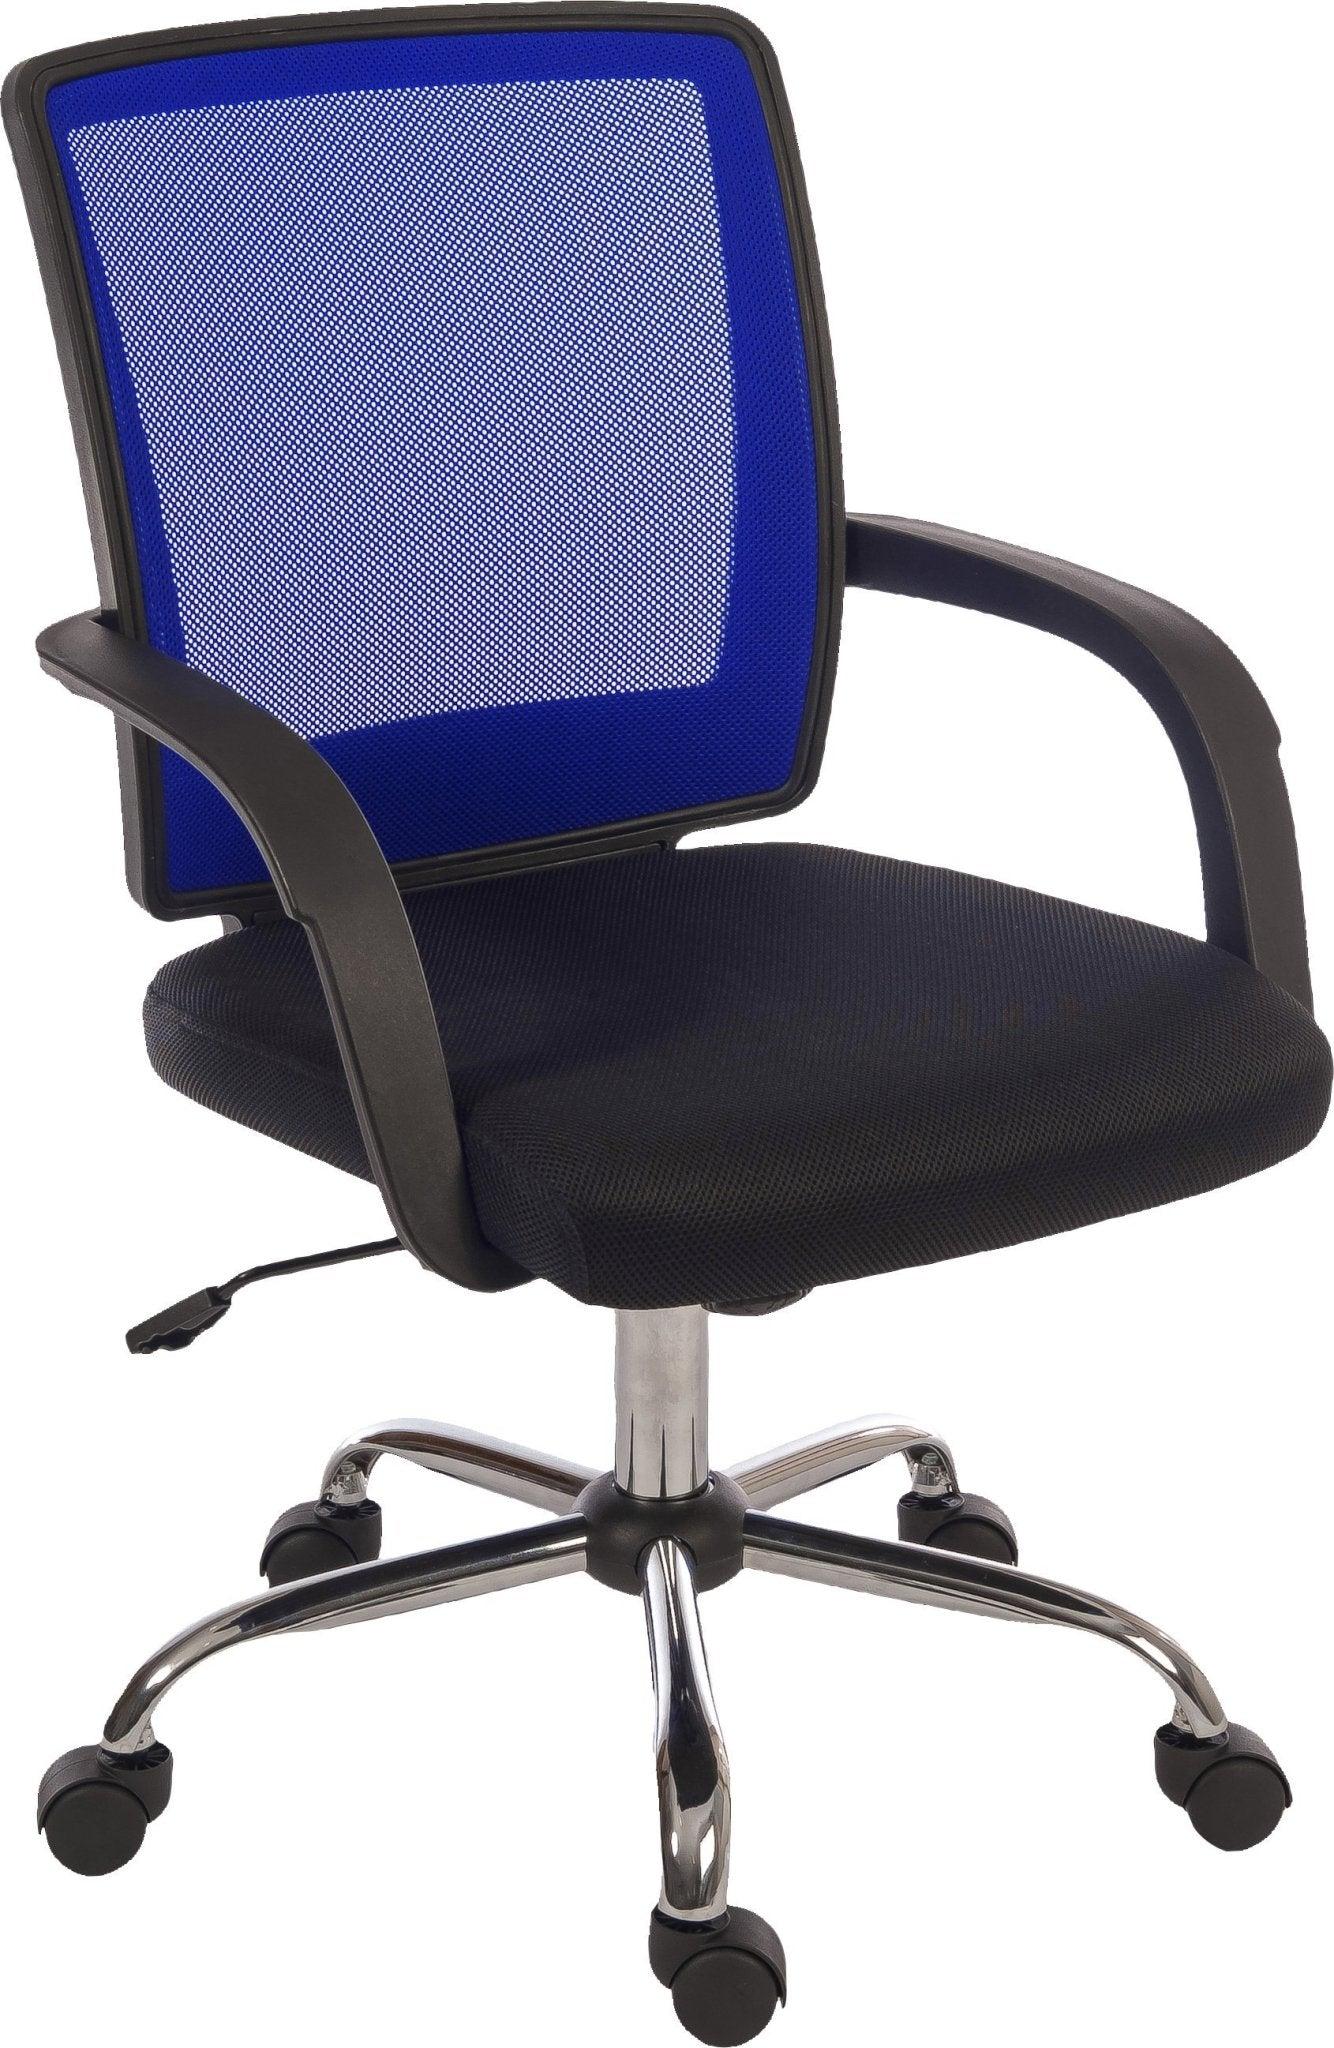 Star mesh office chair (blue) - crimblefest furniture - image 1